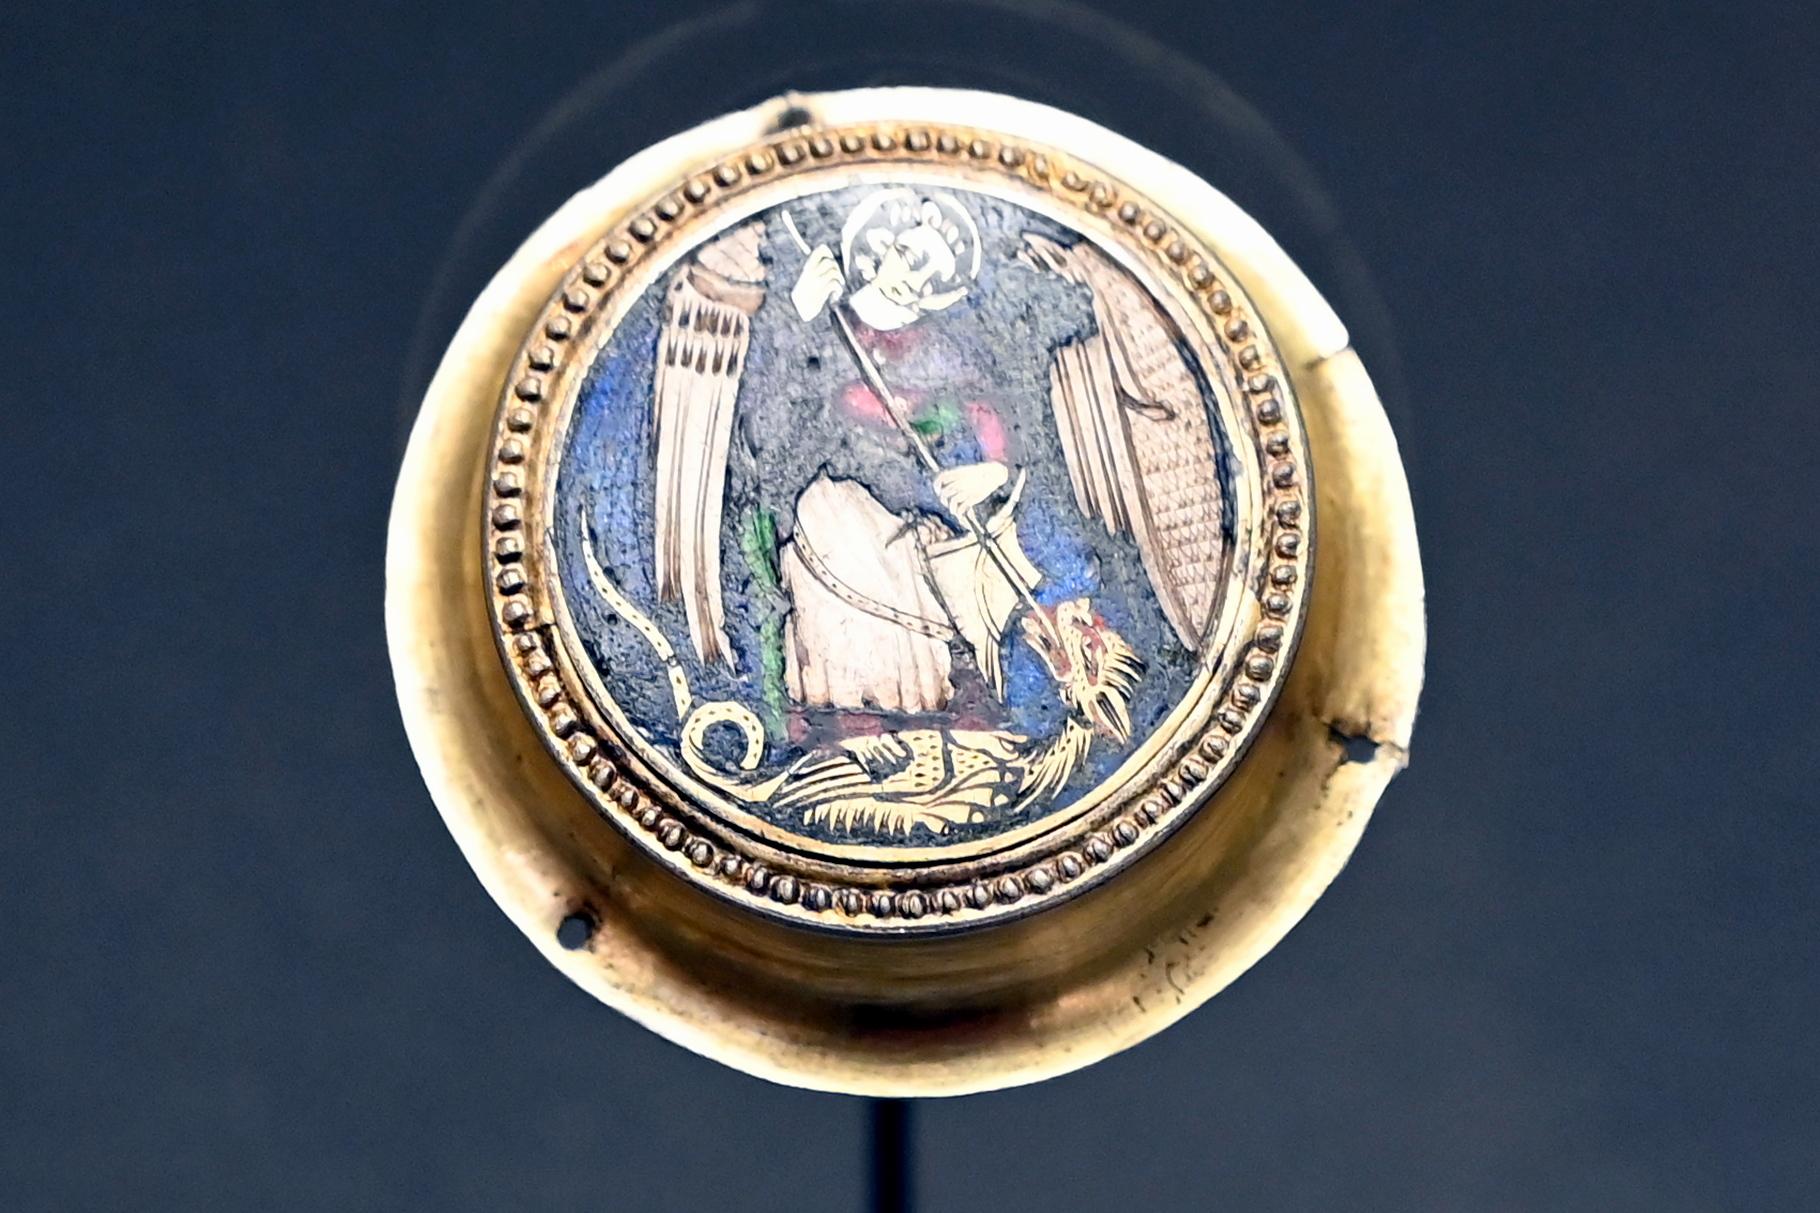 Medaillon mit dem Hl. Michael im Drachenkampf, um 1330 - 1350